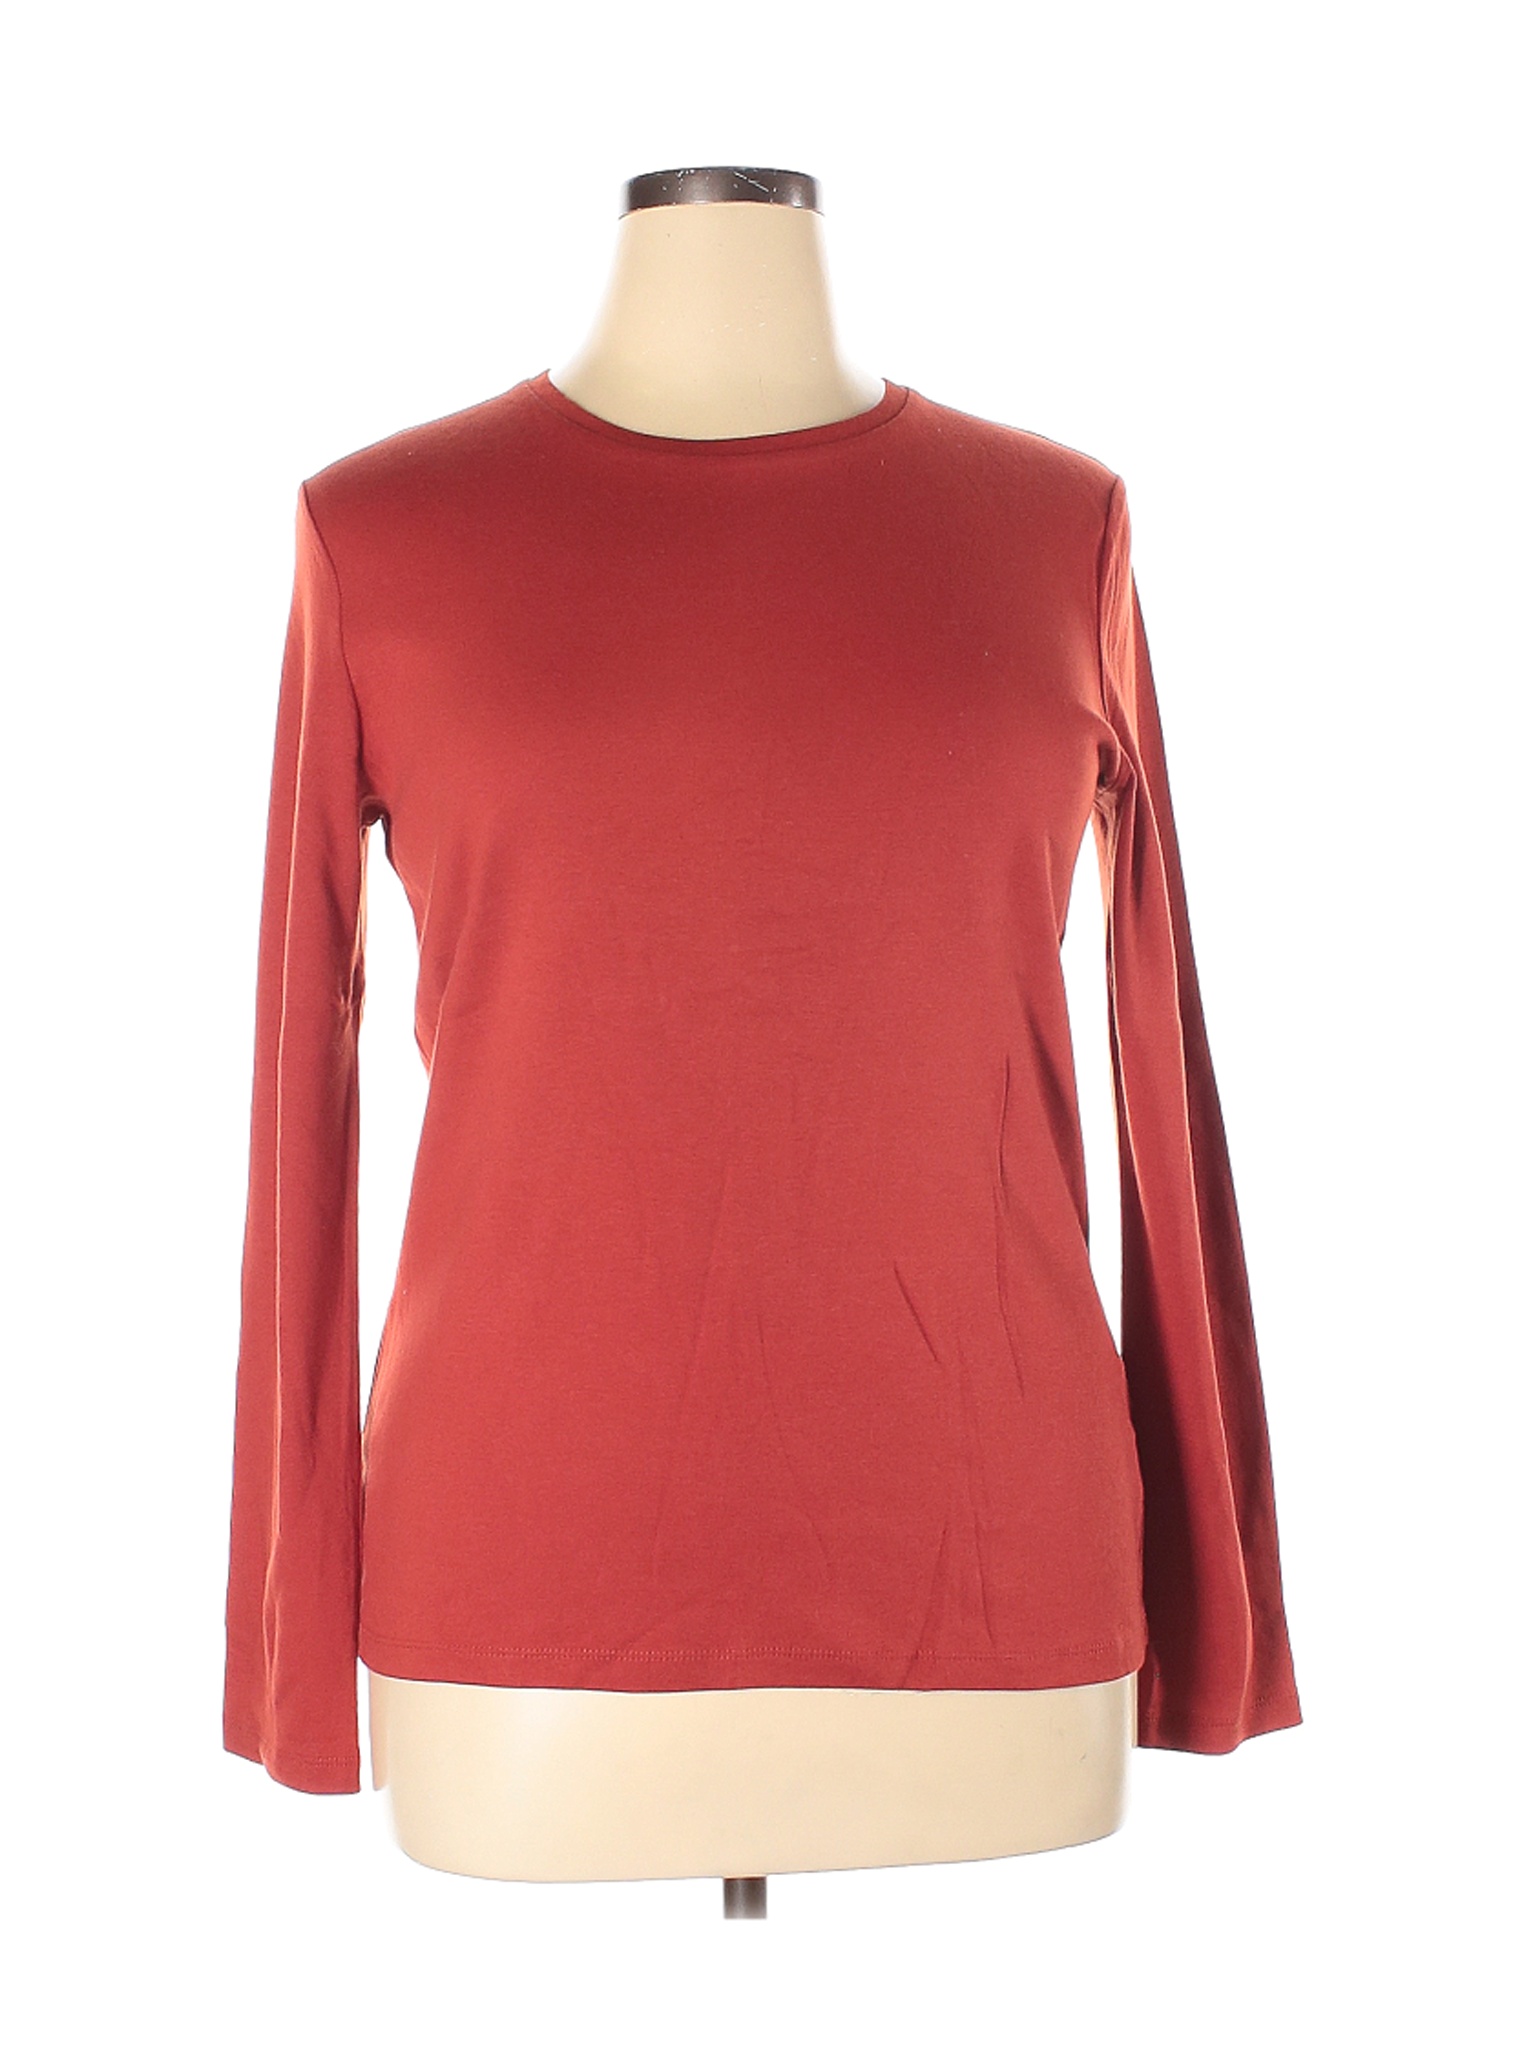 Jones New York Signature Women Orange Long Sleeve T-Shirt XL | eBay